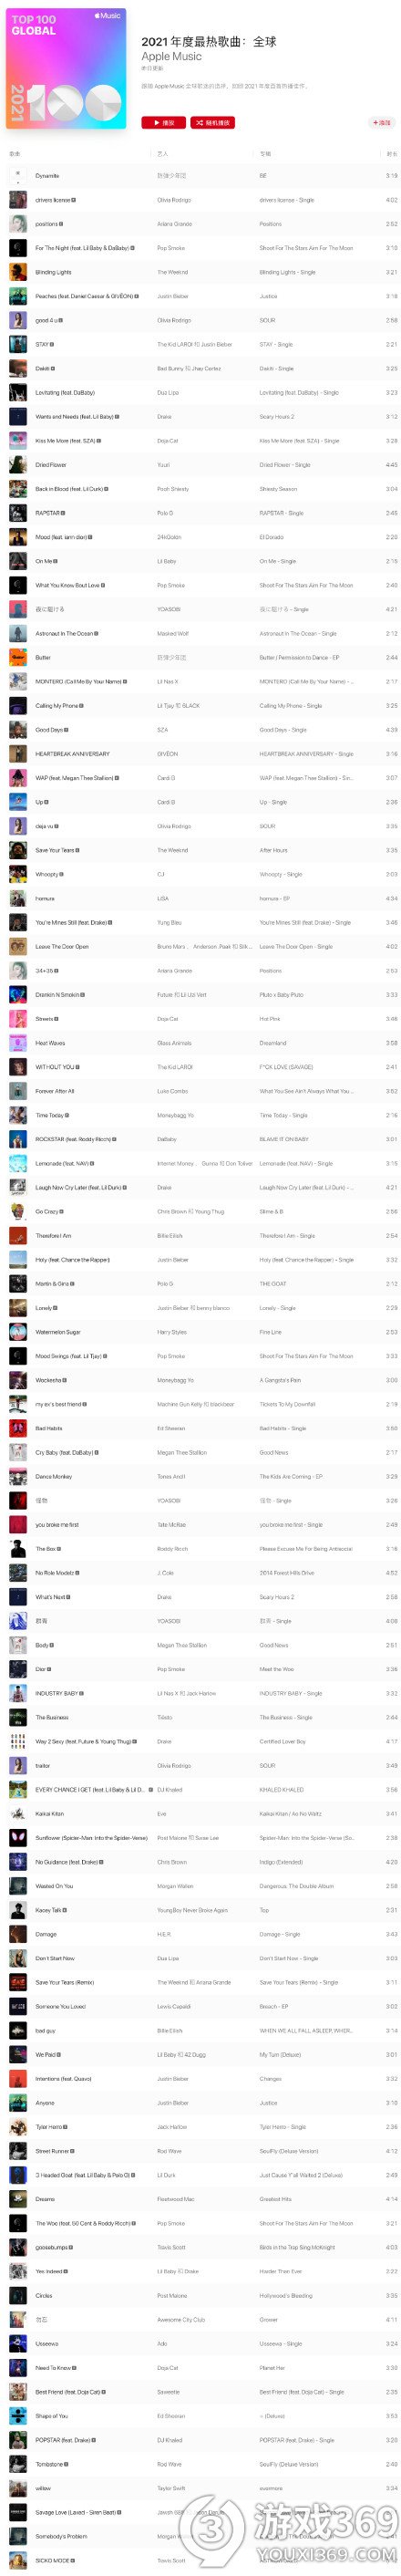 Apple Music2021年音乐榜单 苹果2021年度播放量最多歌曲